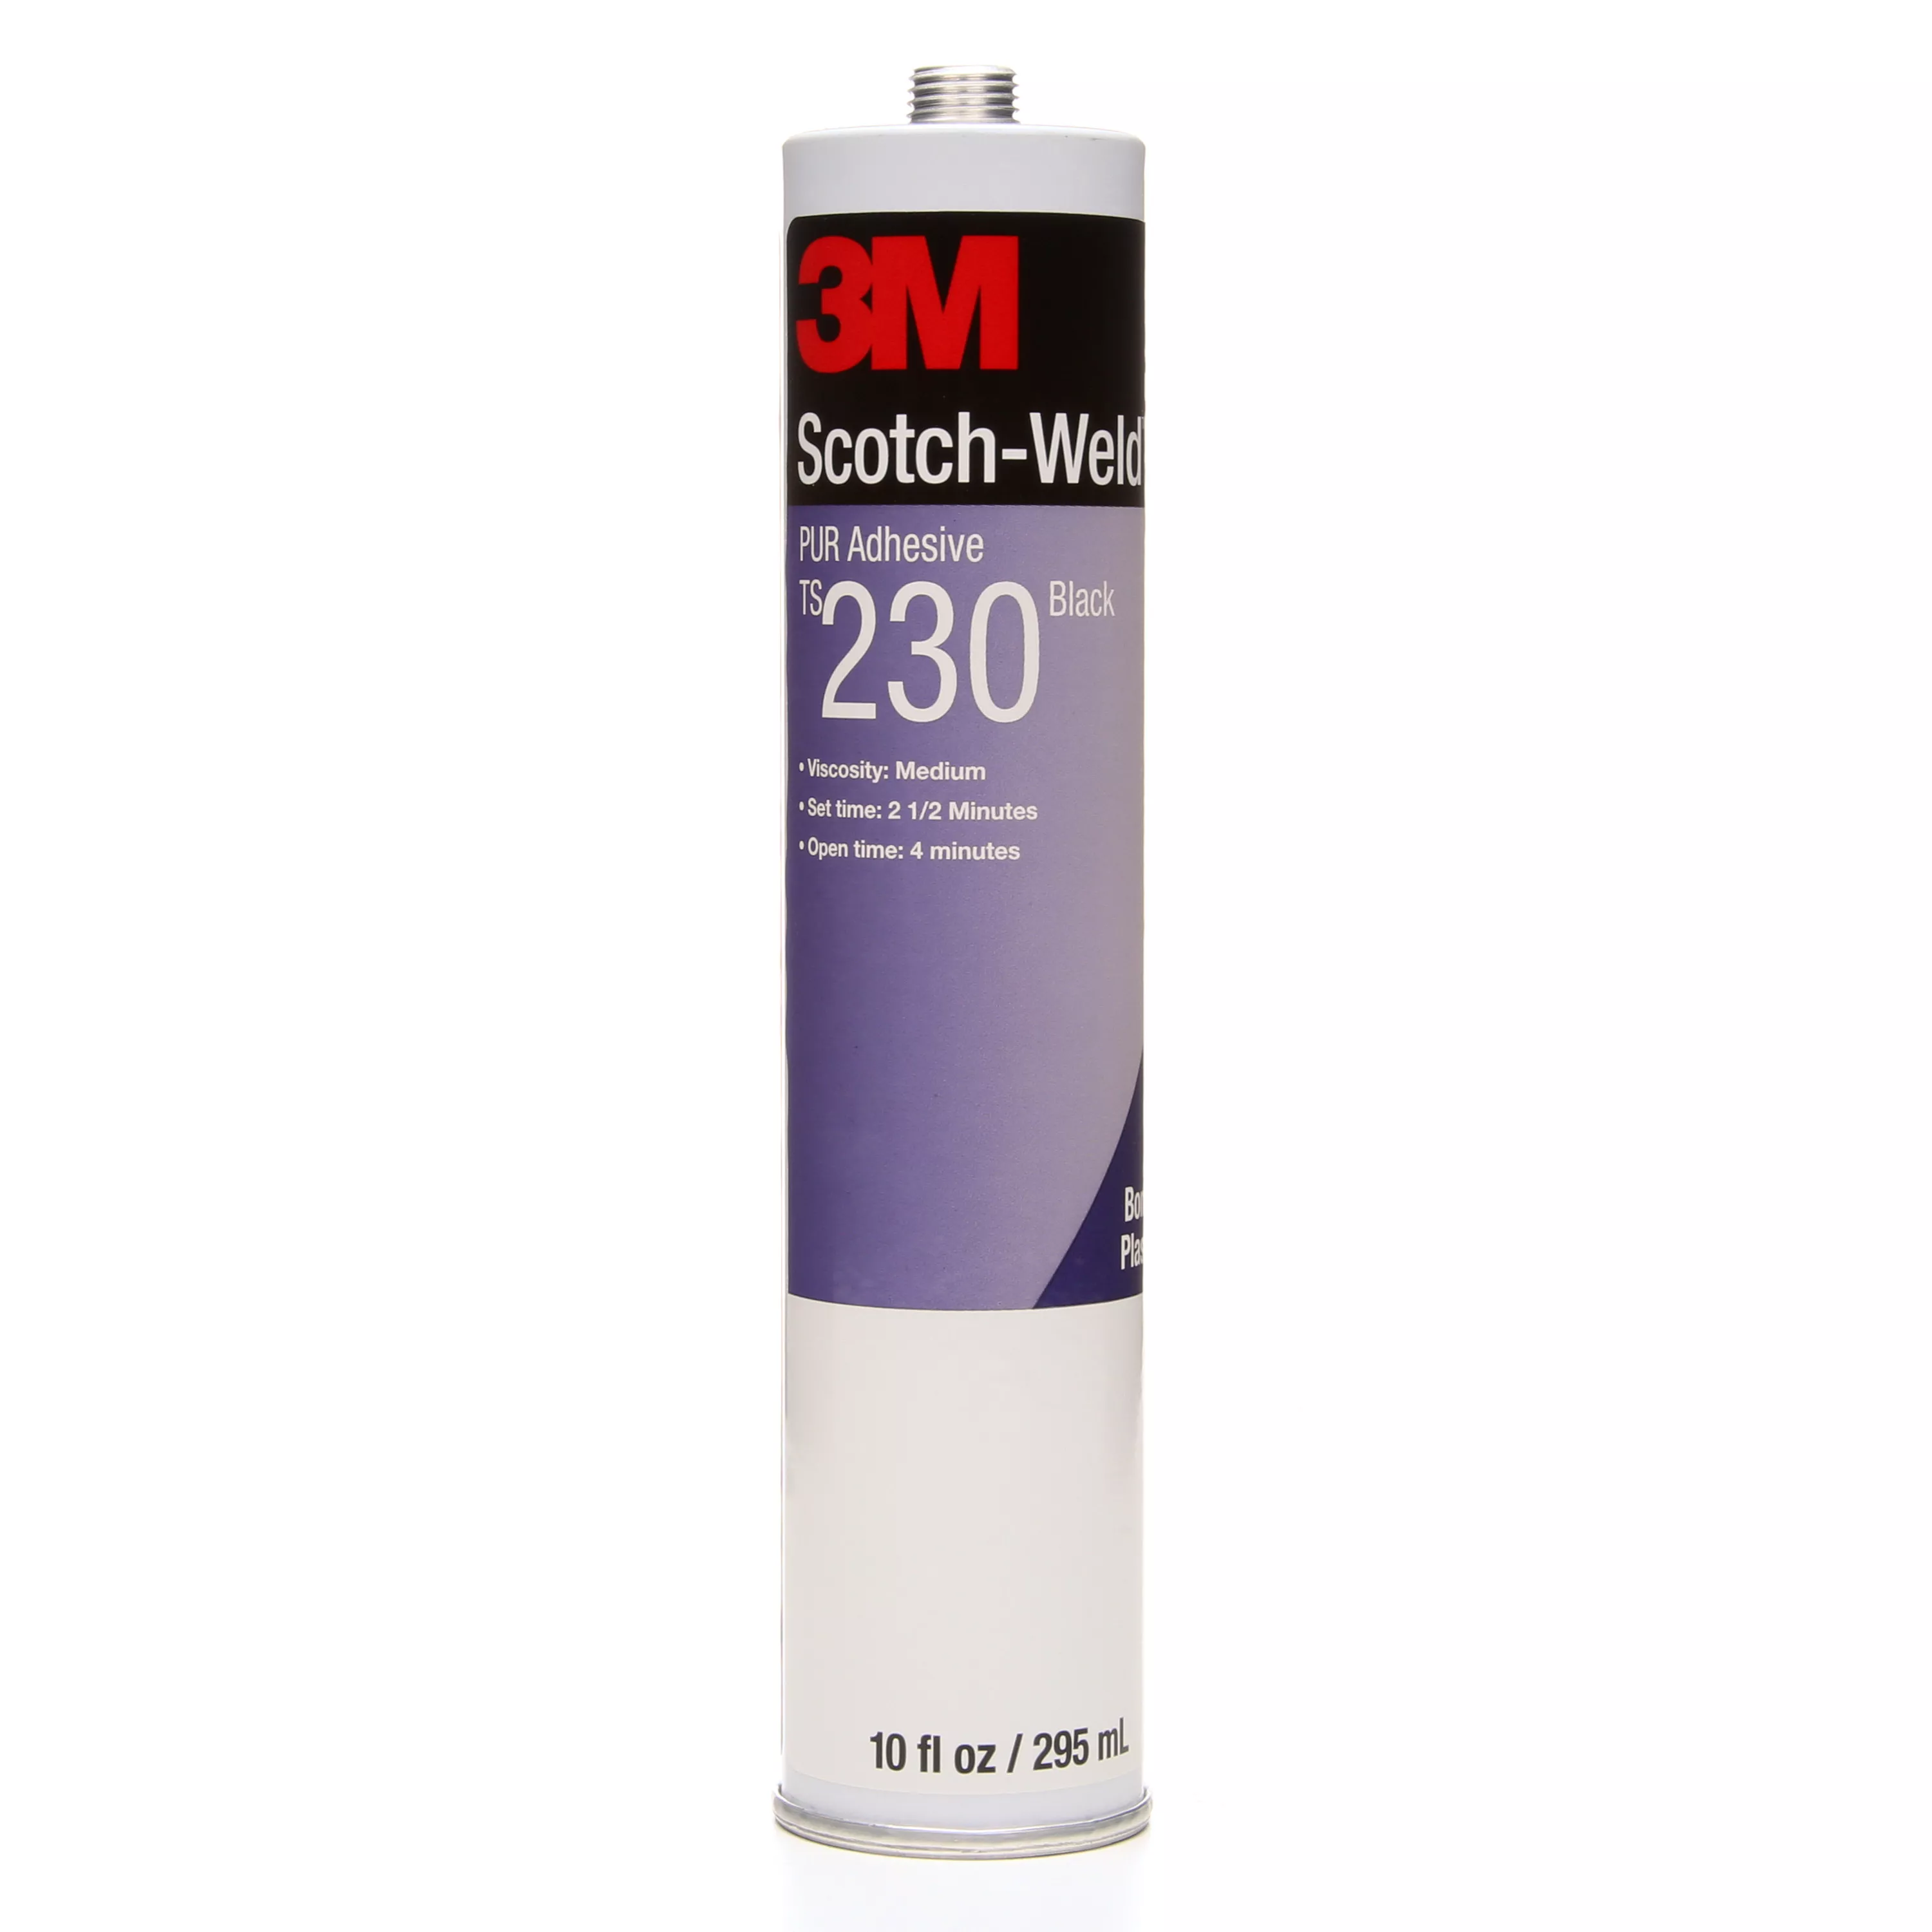 3M™ Scotch-Weld™ PUR Adhesive TS230, Black, 1/10 Gallon Cartridge, 5
Bottle/Case